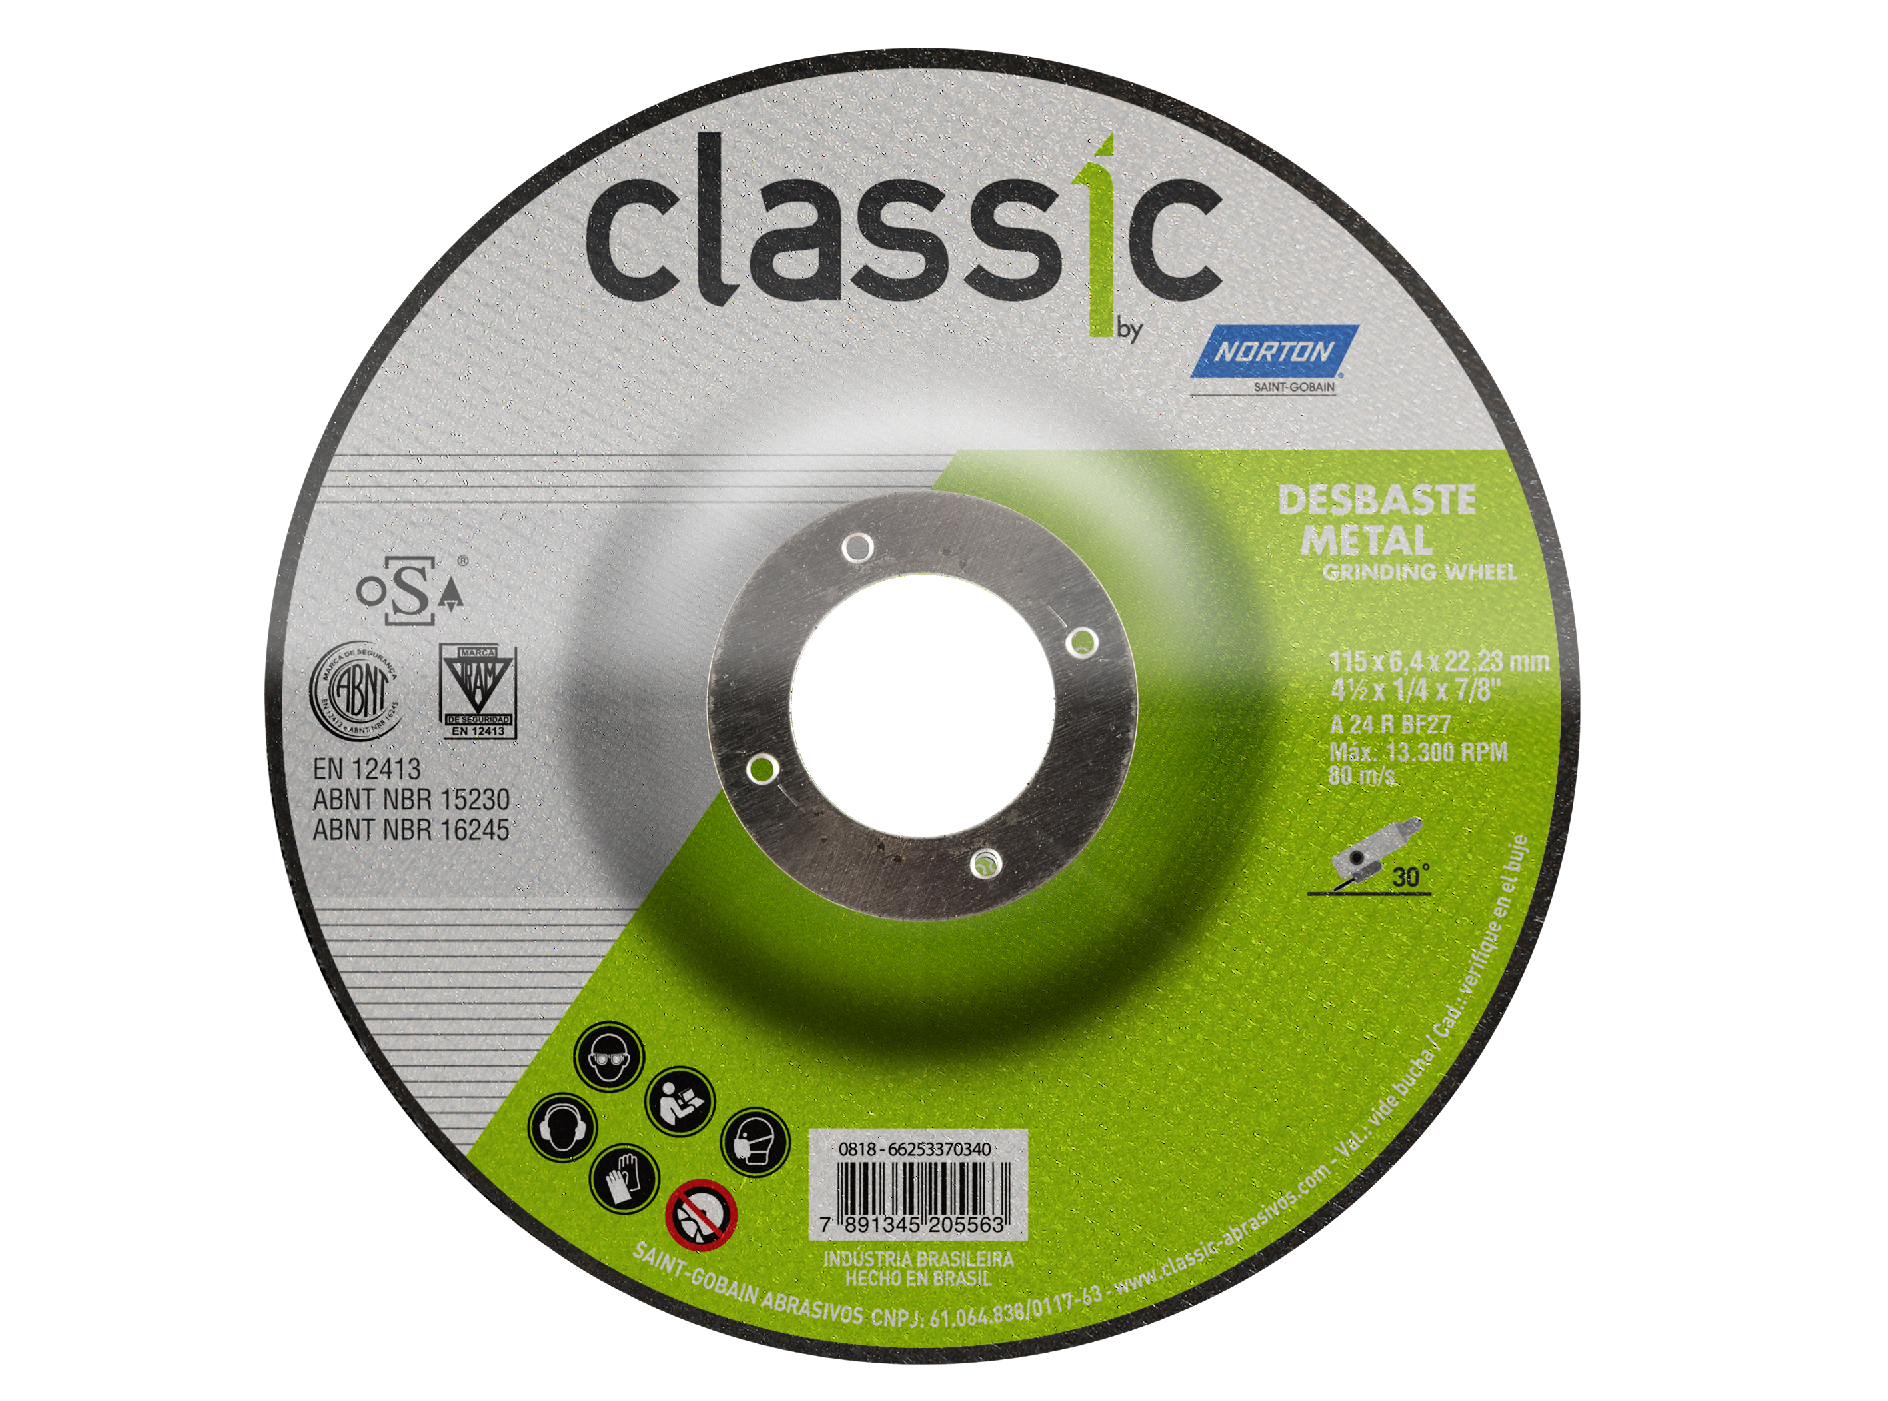  DISCO DESBASTE METAL CLASSIC 115X6.4X22.23MMX10 UN 